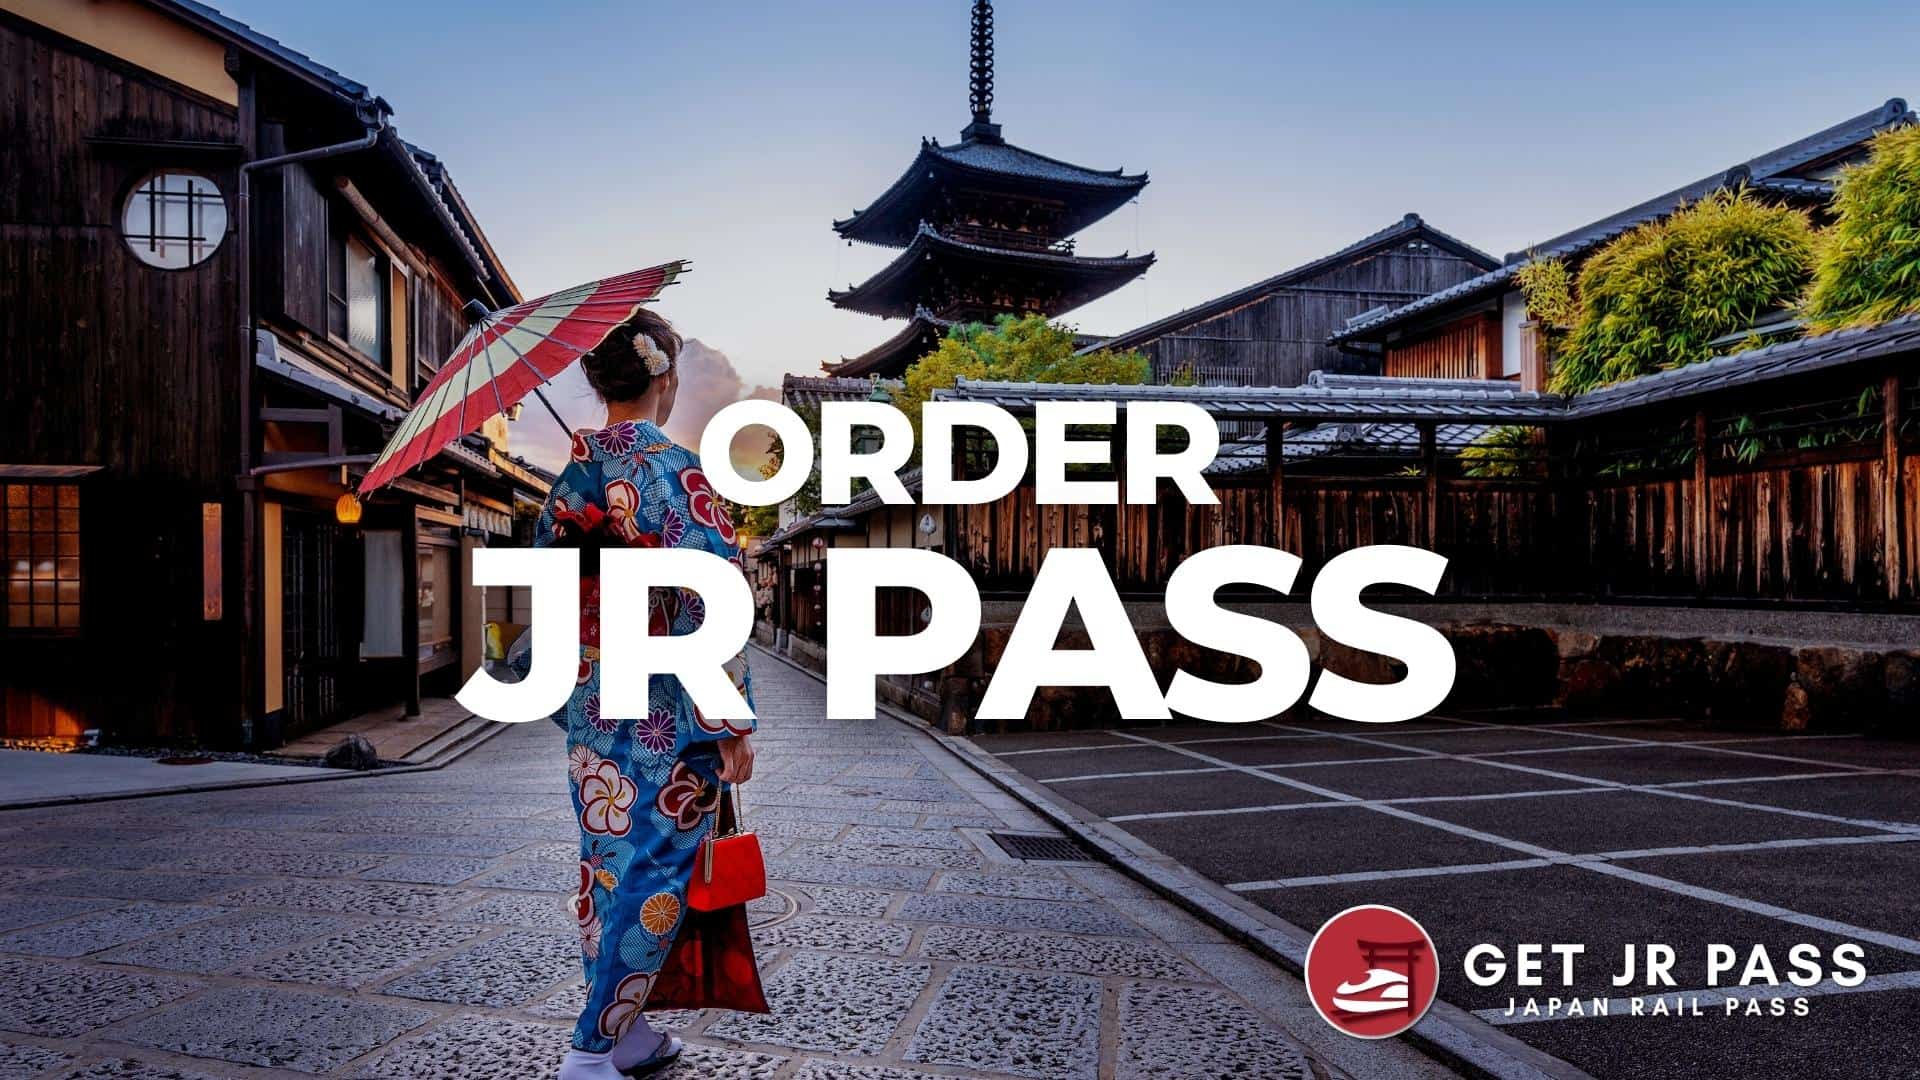 Order japan rail pass